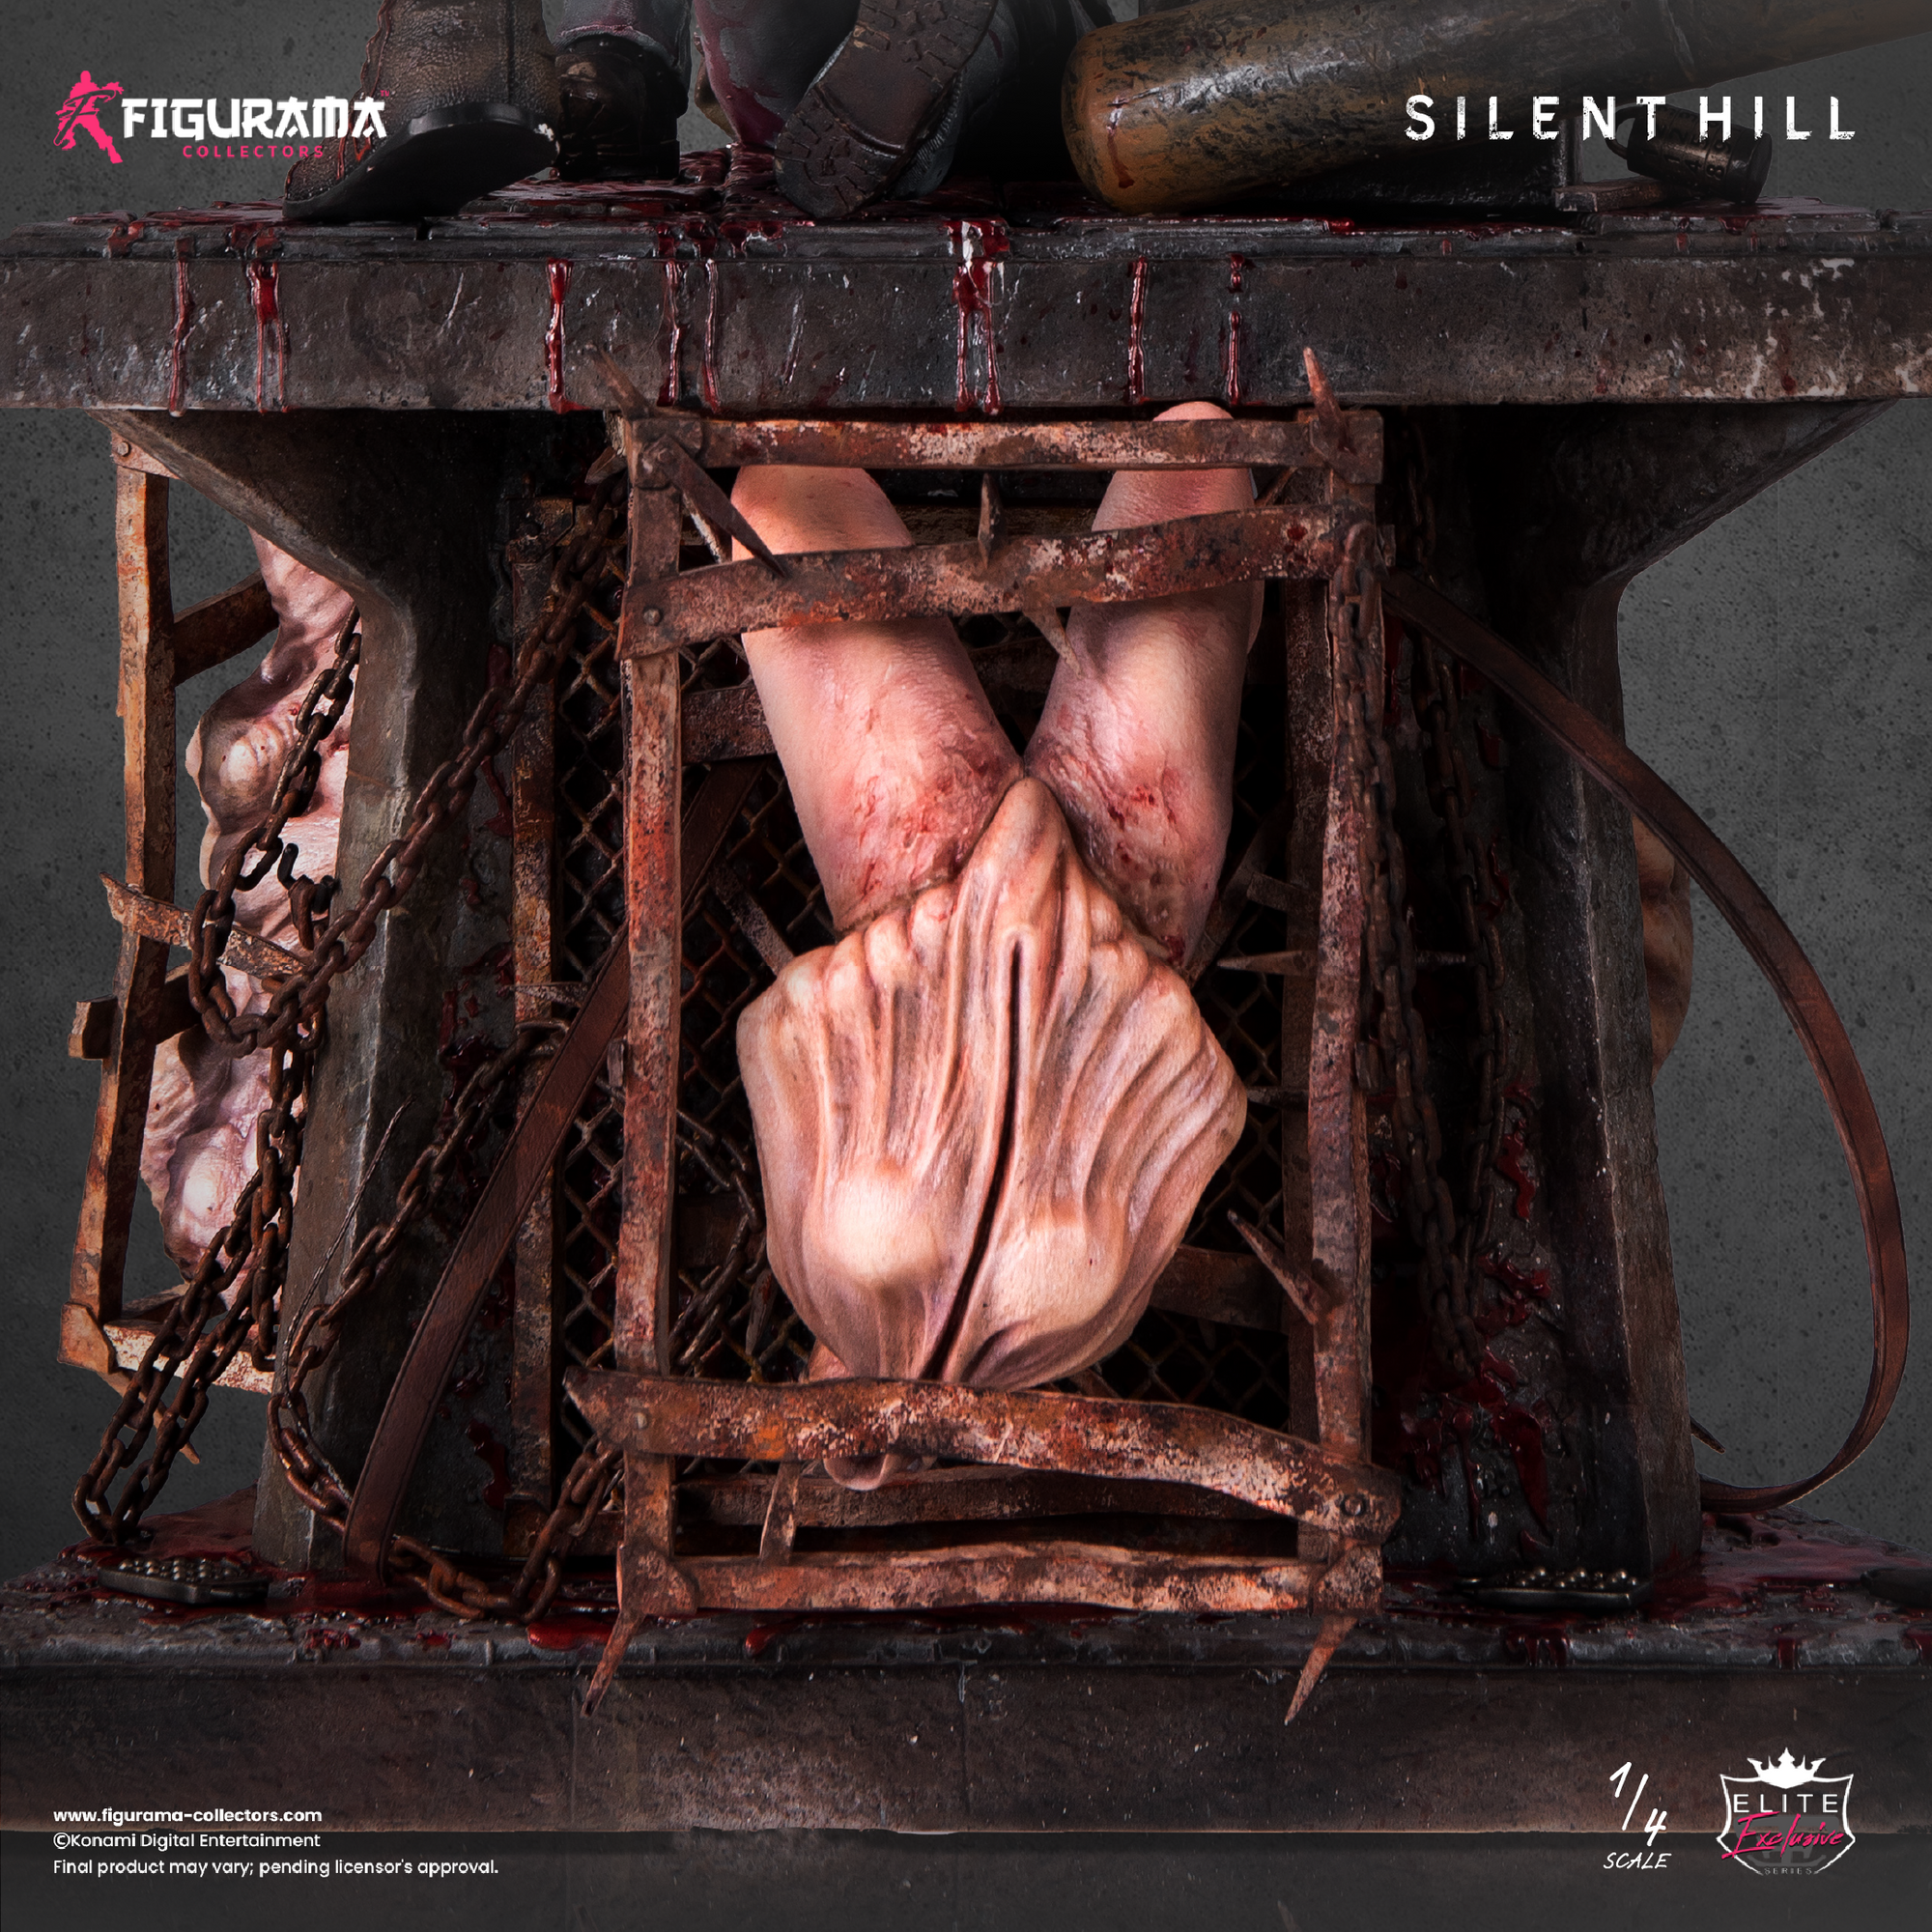 Silent Hill - Red Pyramid vs. James Sunderland 1/4 Scale Elite Exclusi -  Spec Fiction Shop